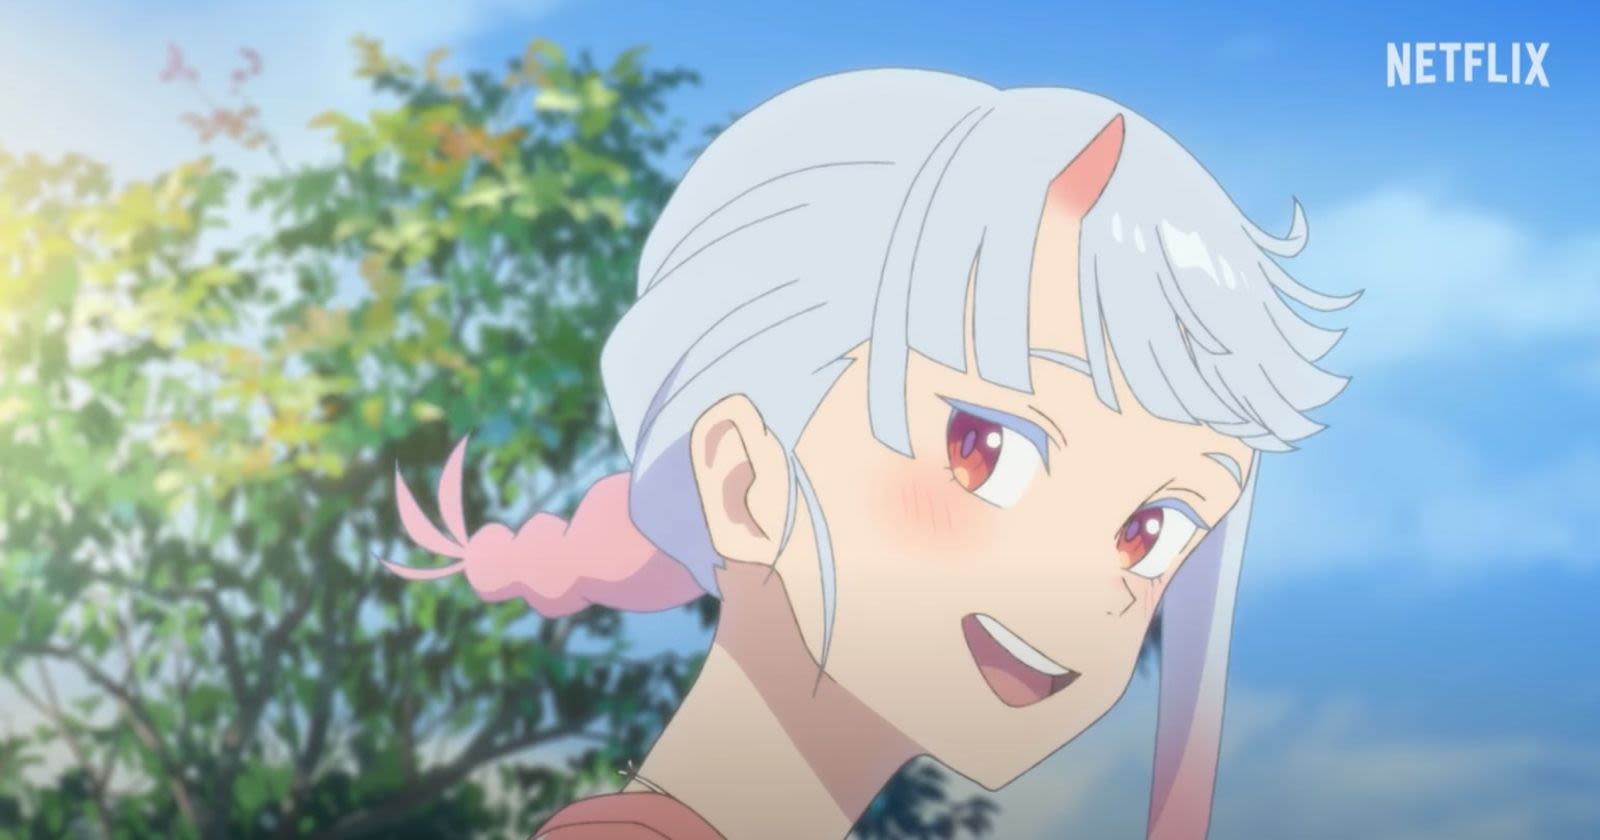 Netflix's My Oni Girl Fantasy Romance Anime Movie Gets New Trailer